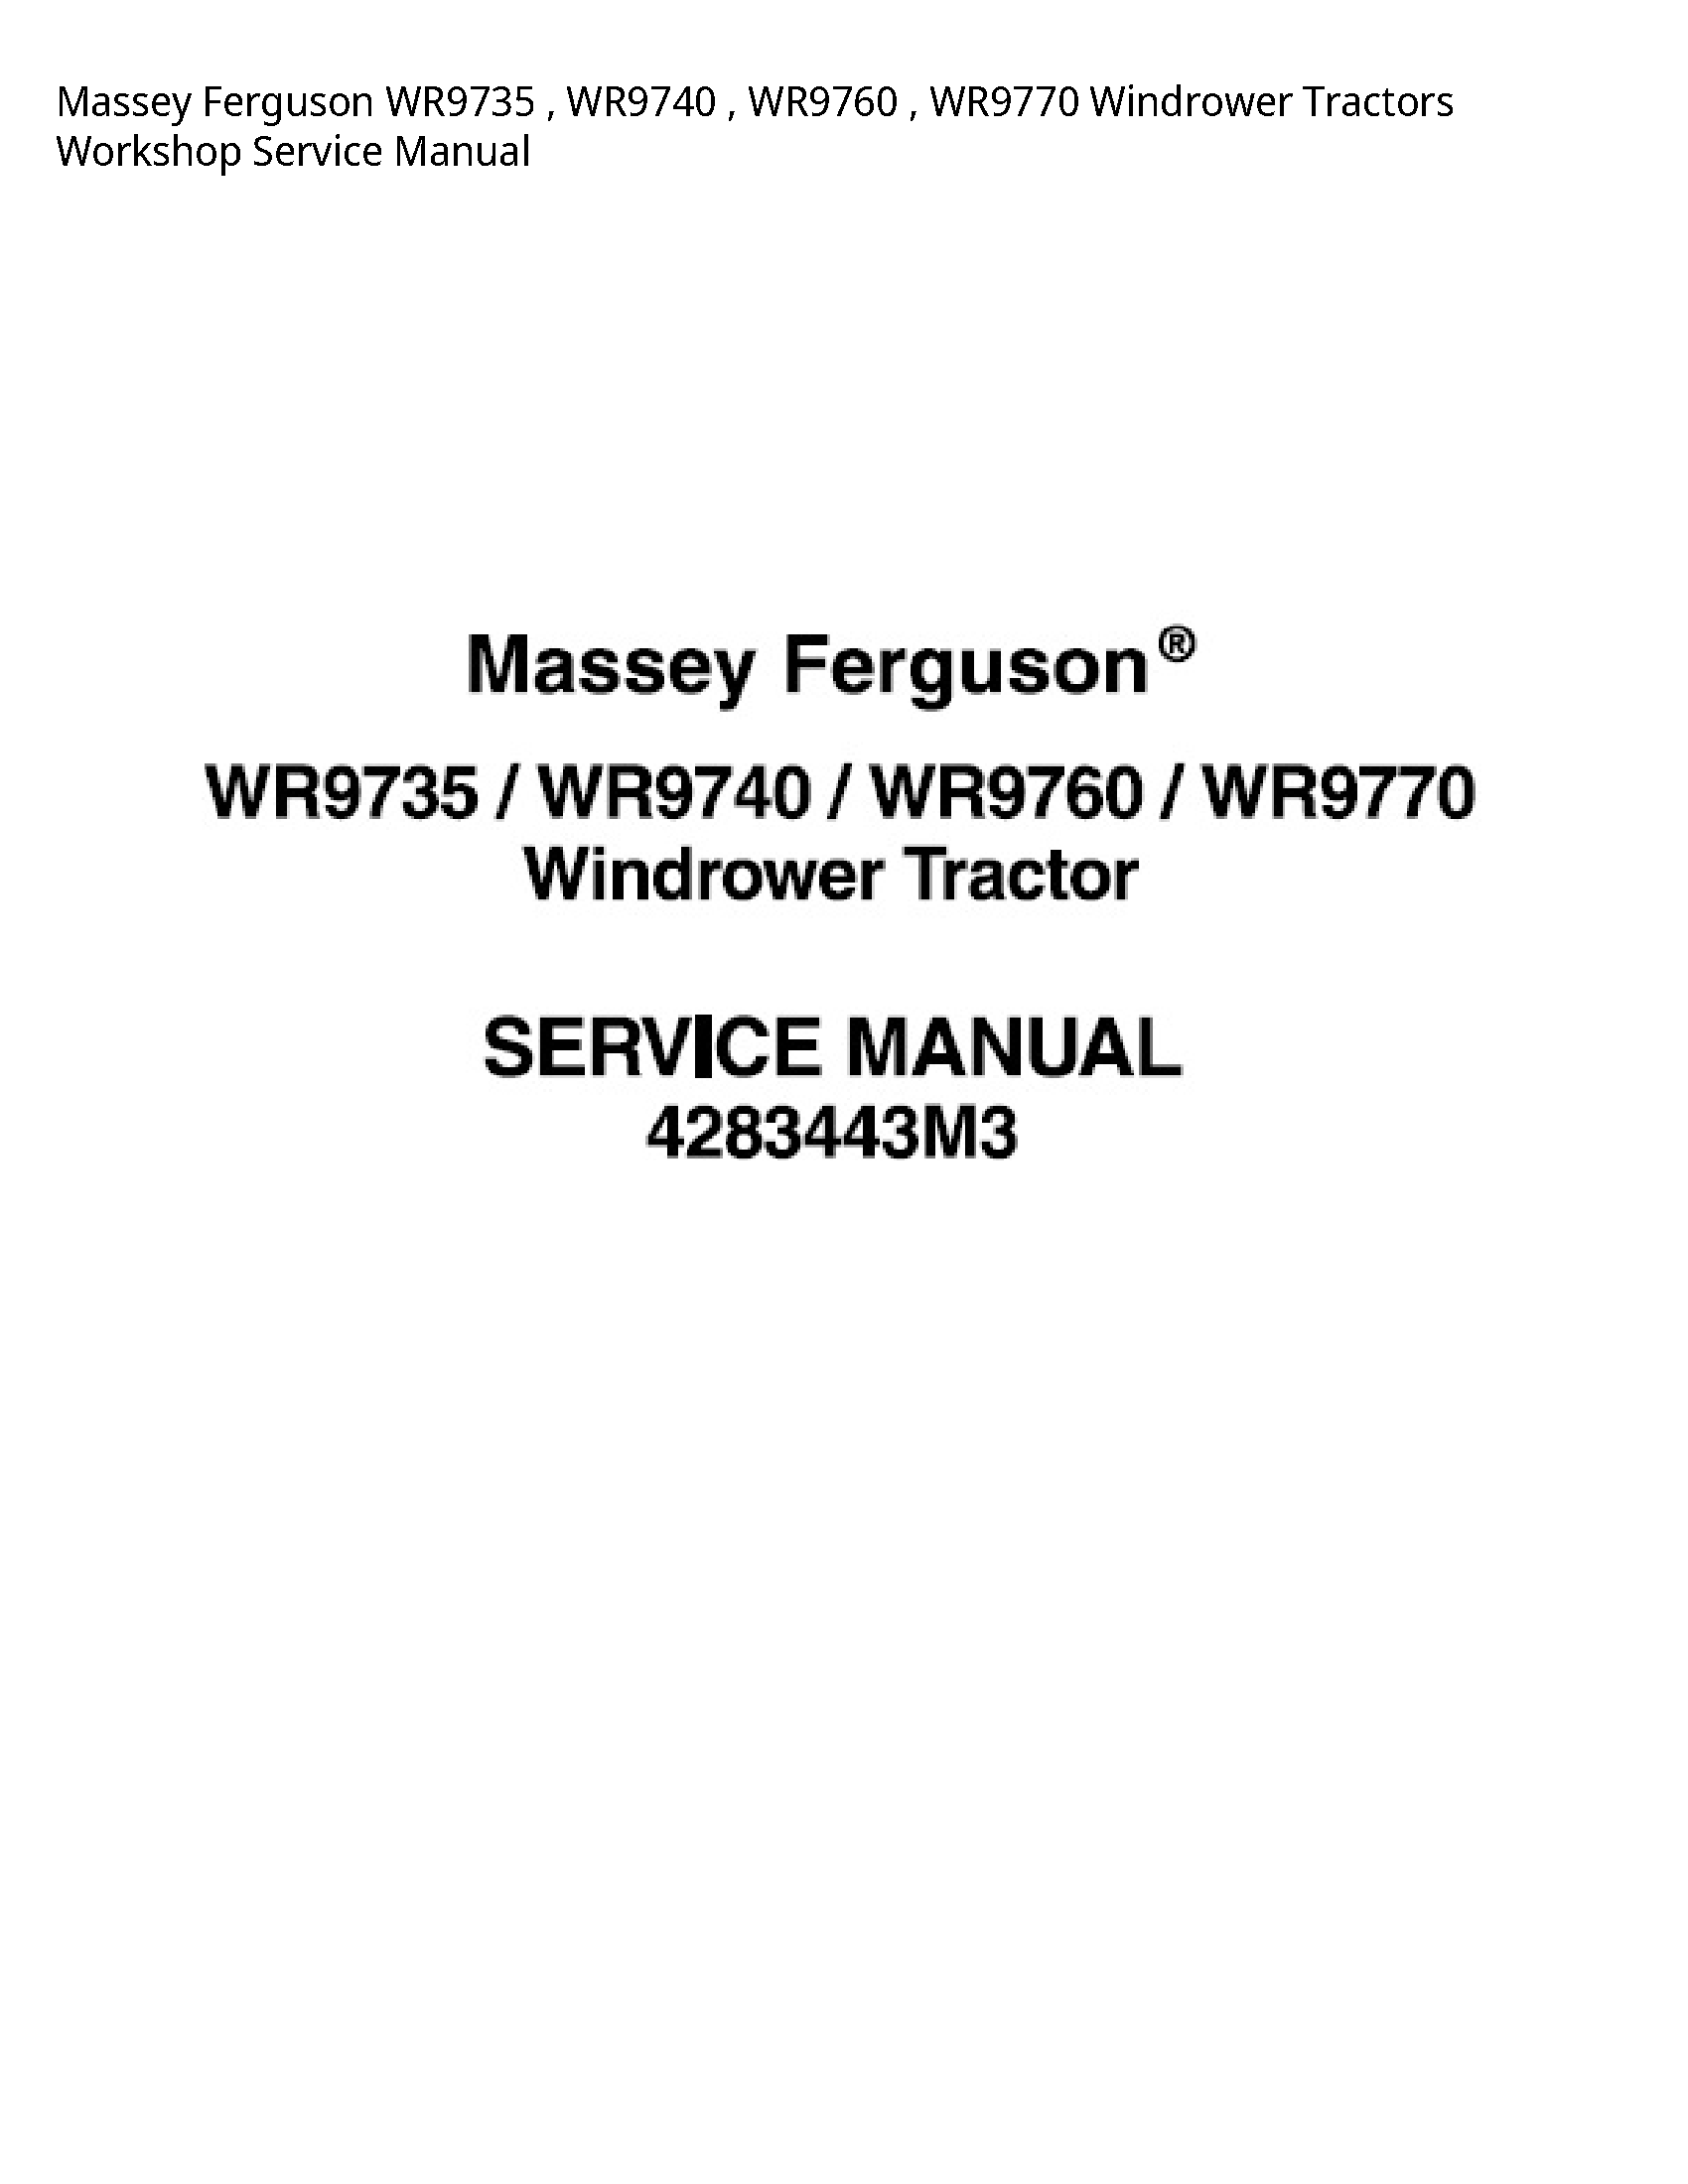 Massey Ferguson WR9735 Windrower Tractors Service manual